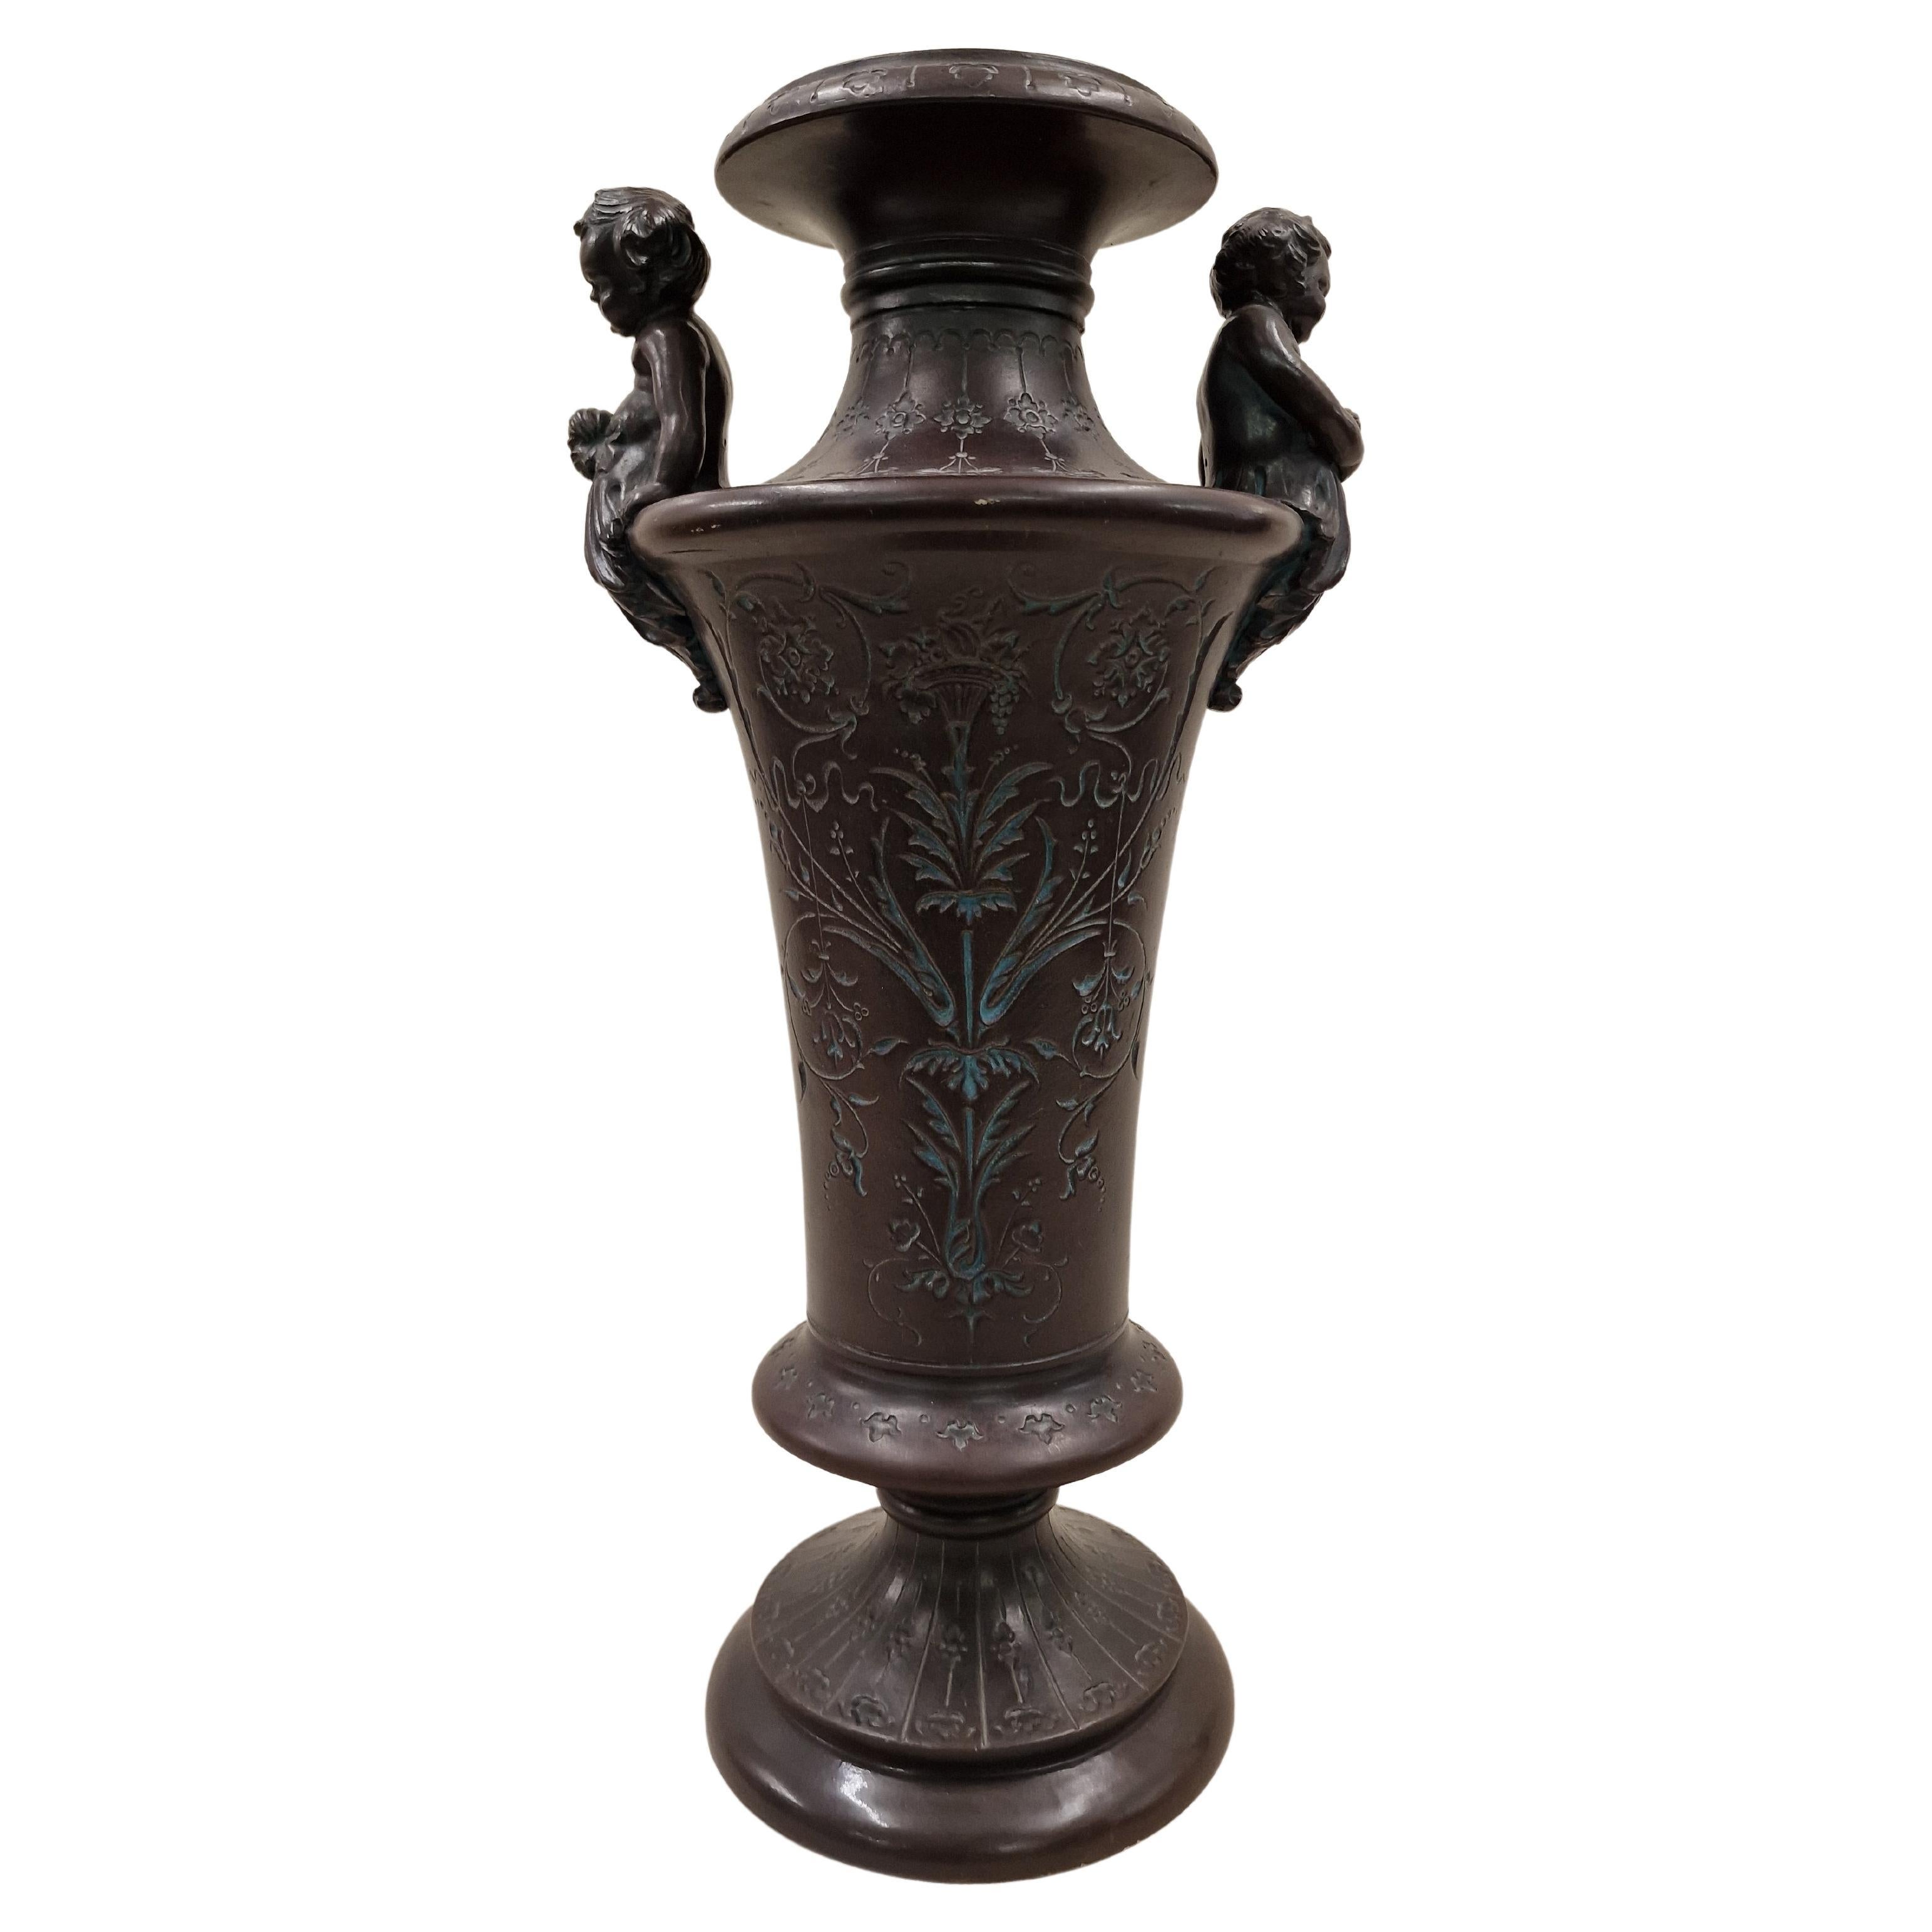 Große Amphore, Vase, Keramik/Majolika, Bernhard Bloch, 1890, Historischismus, Böhmen